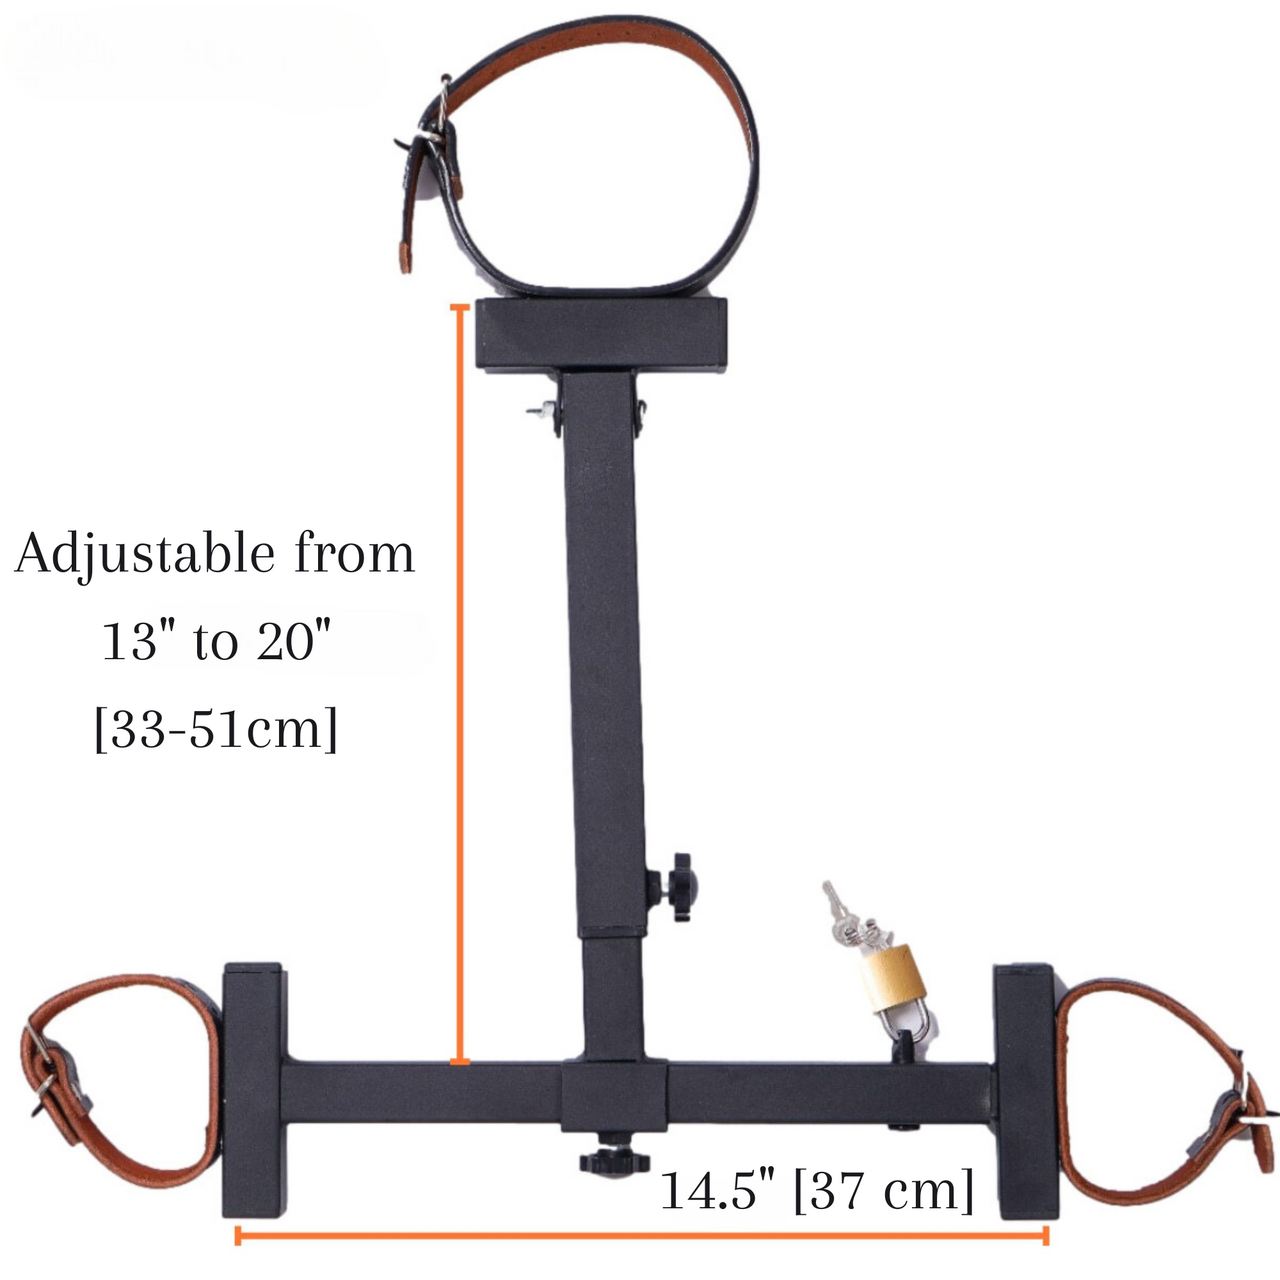 measurements of an adjustable BDSM neck and wrist bondage yoke